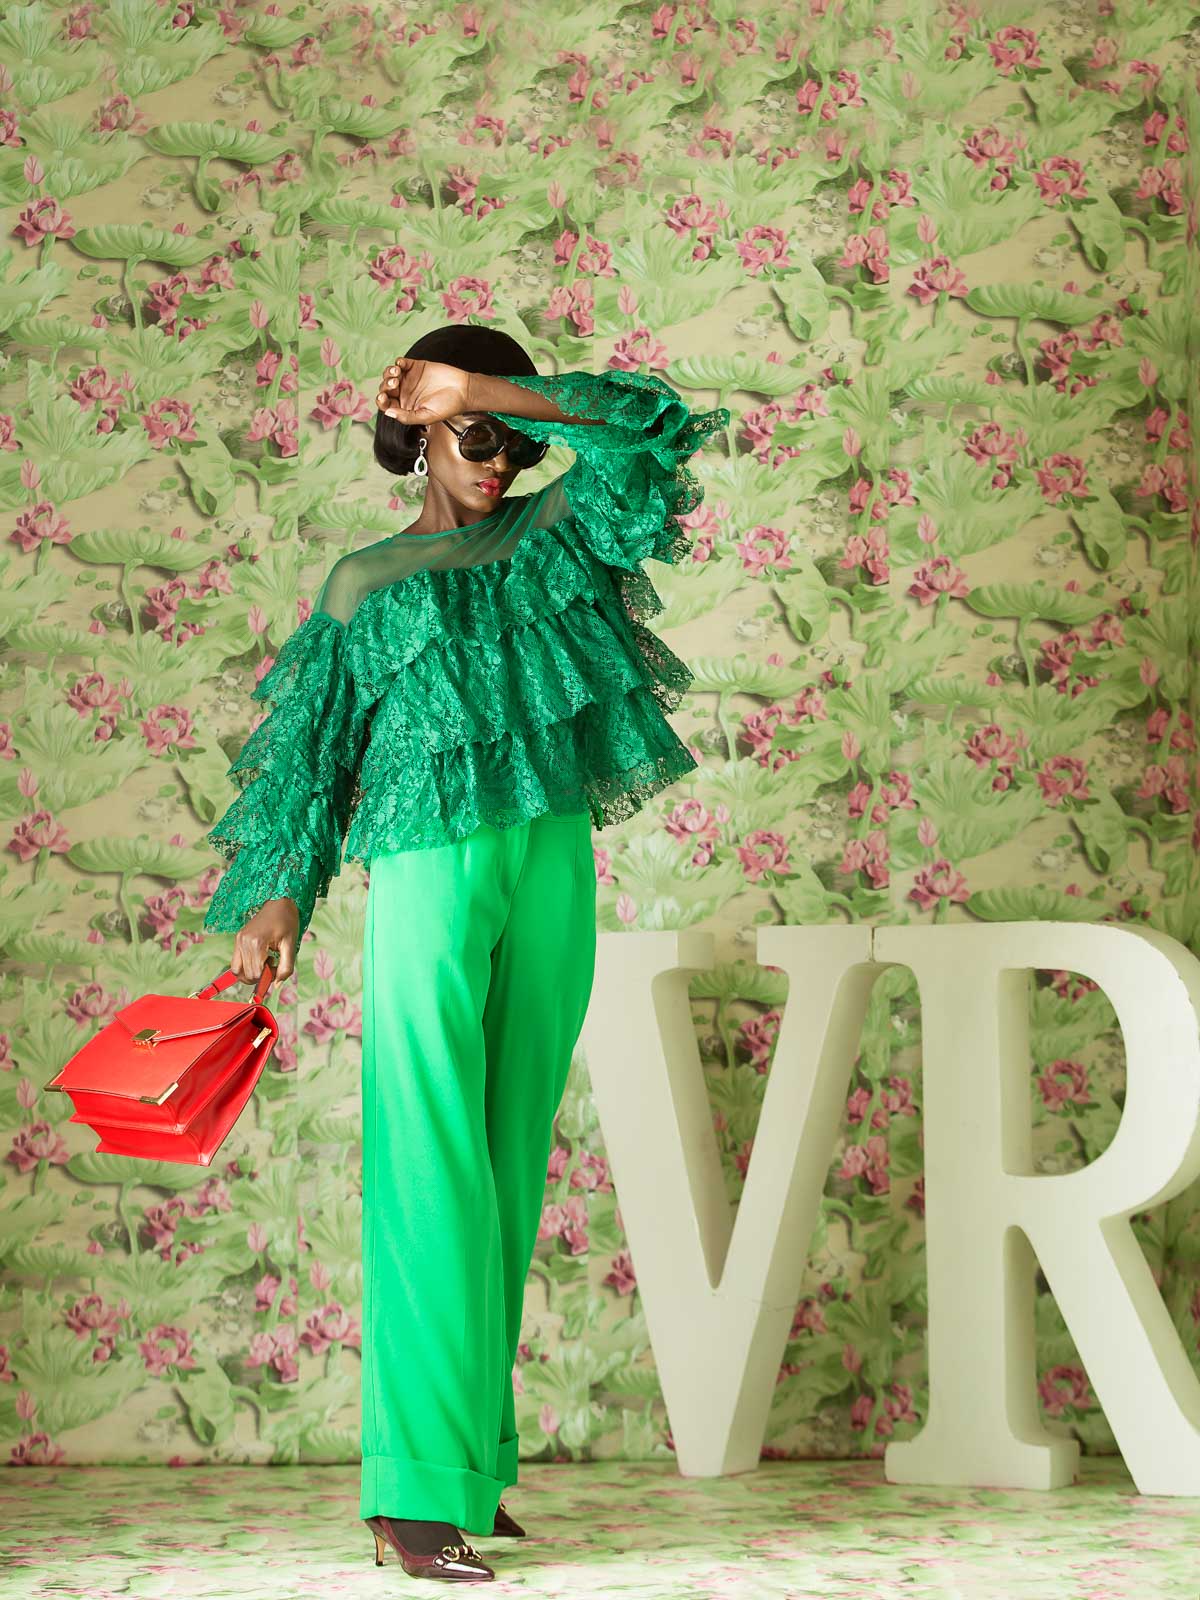 VR by MOBOS | 2017 Fashion Week Edit